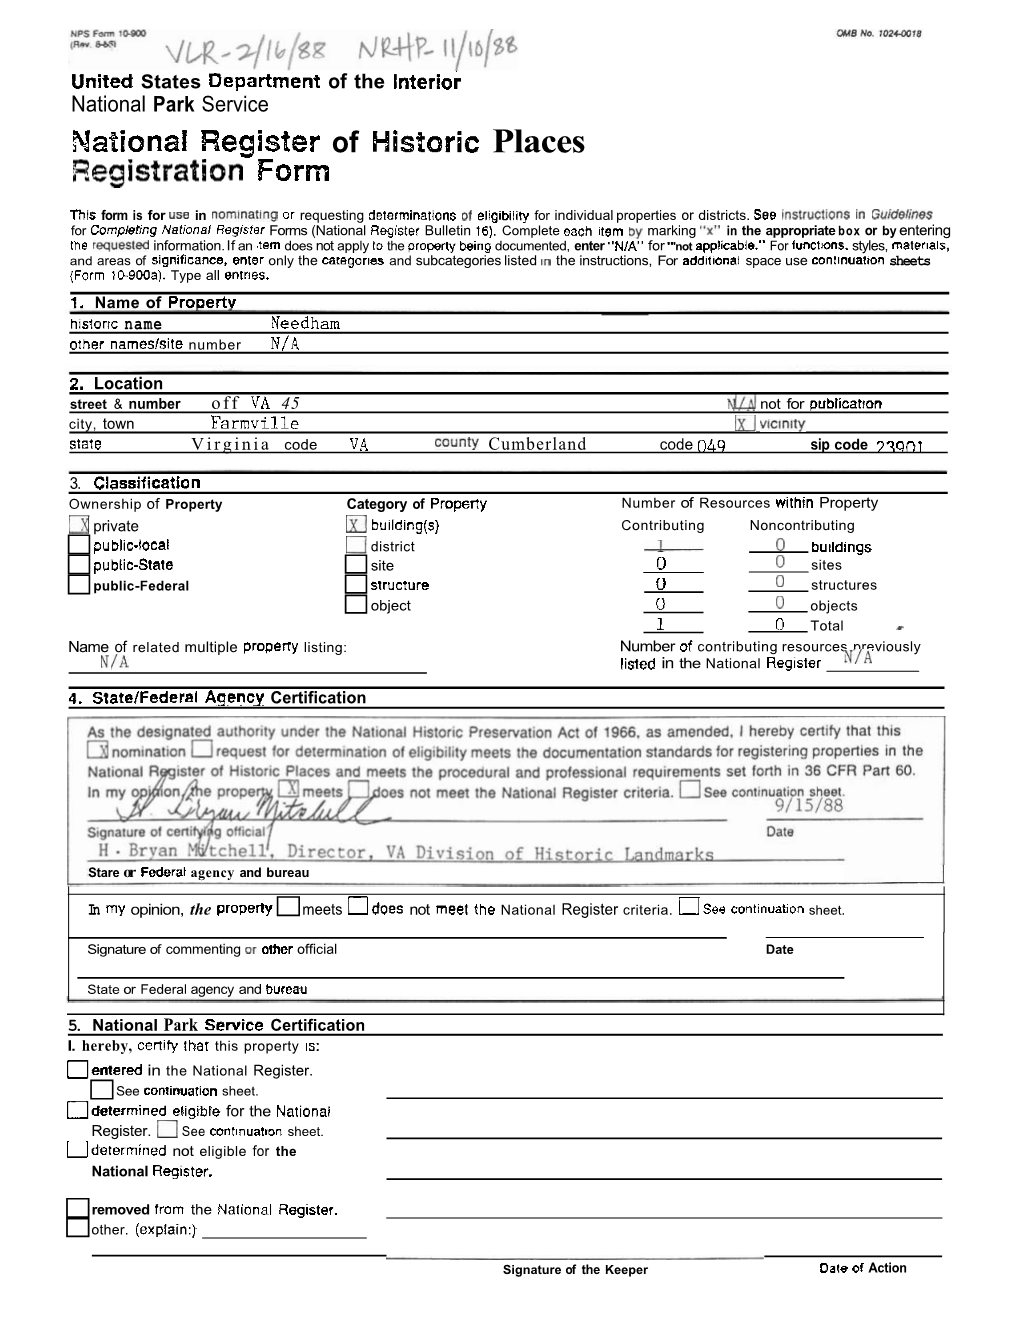 National Register of Historic Places Wegistration Form